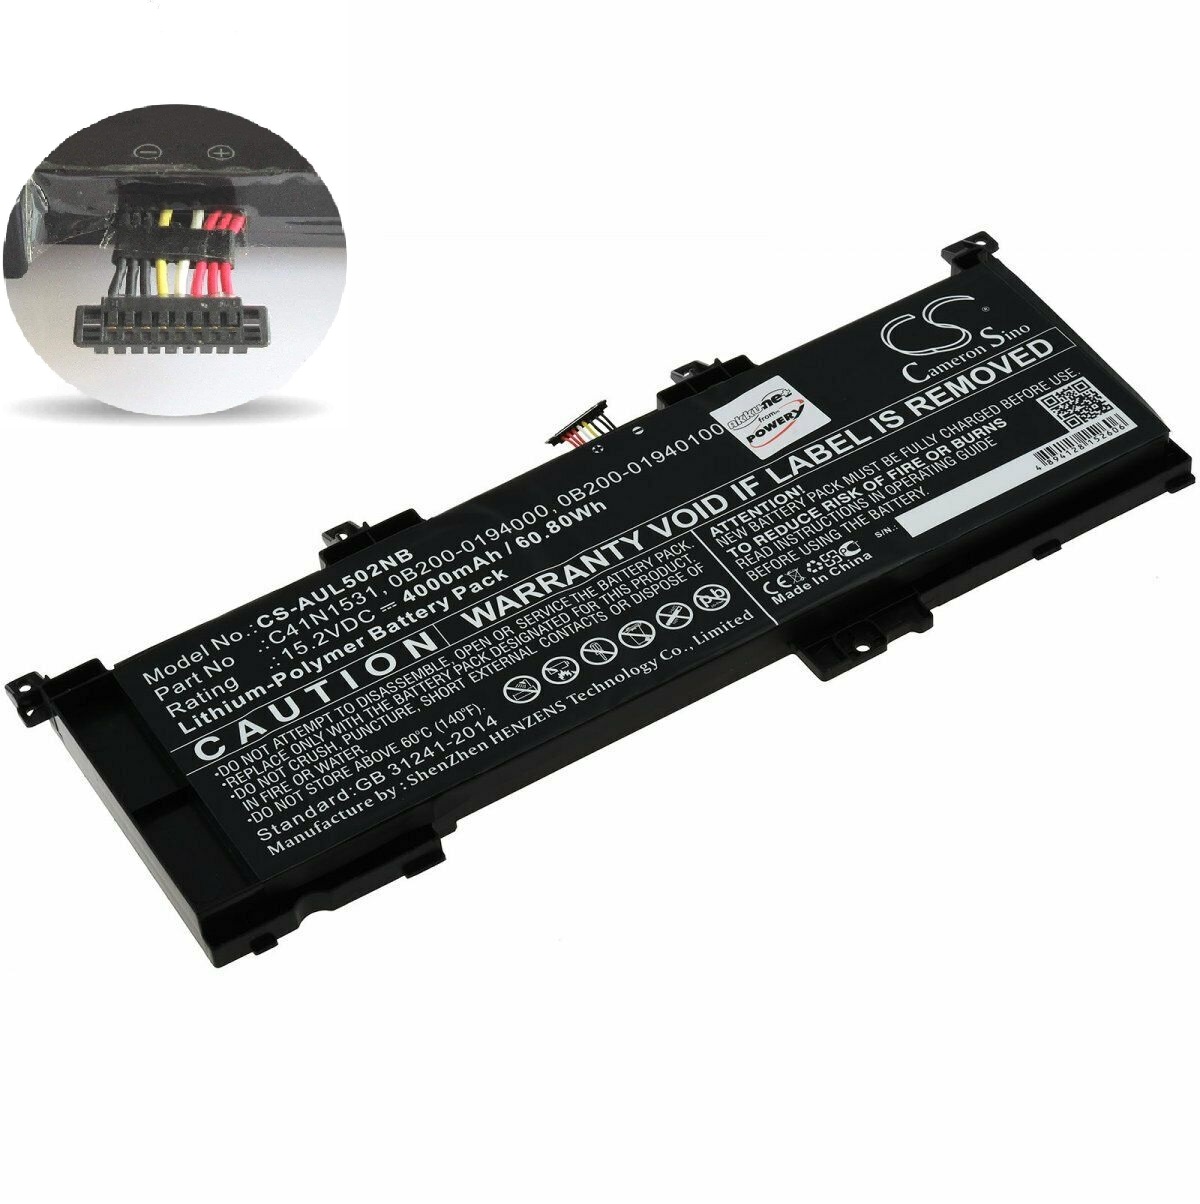 Batteri til Asus GL502VY-DS71 GL502VY-DS74 Rog GL502VS GL502VT Rog Strix GL502VS C41N1531 0B200-01940100 (kompatibelt)